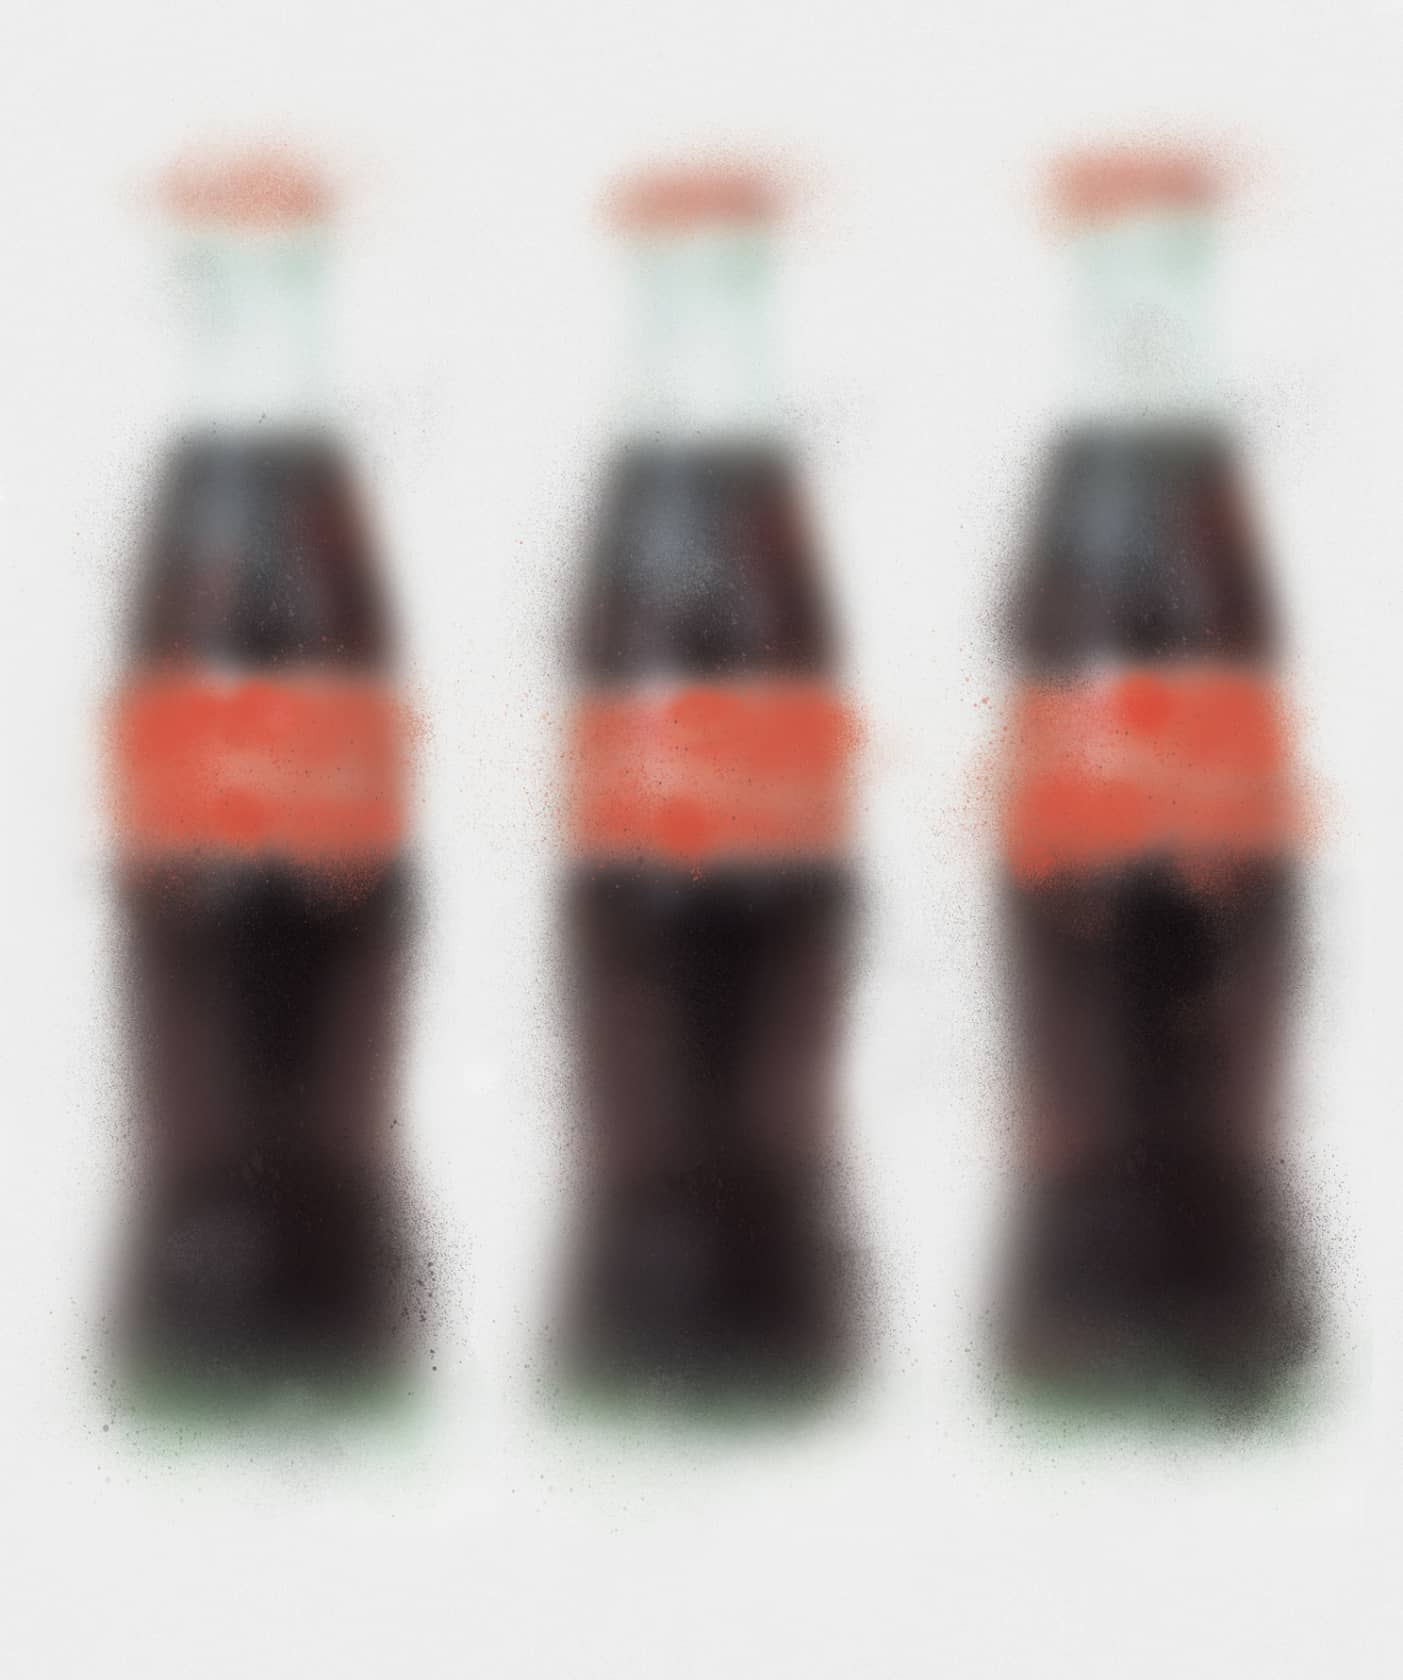 Miaz Brothers, Coca Cola Bottles, 2020